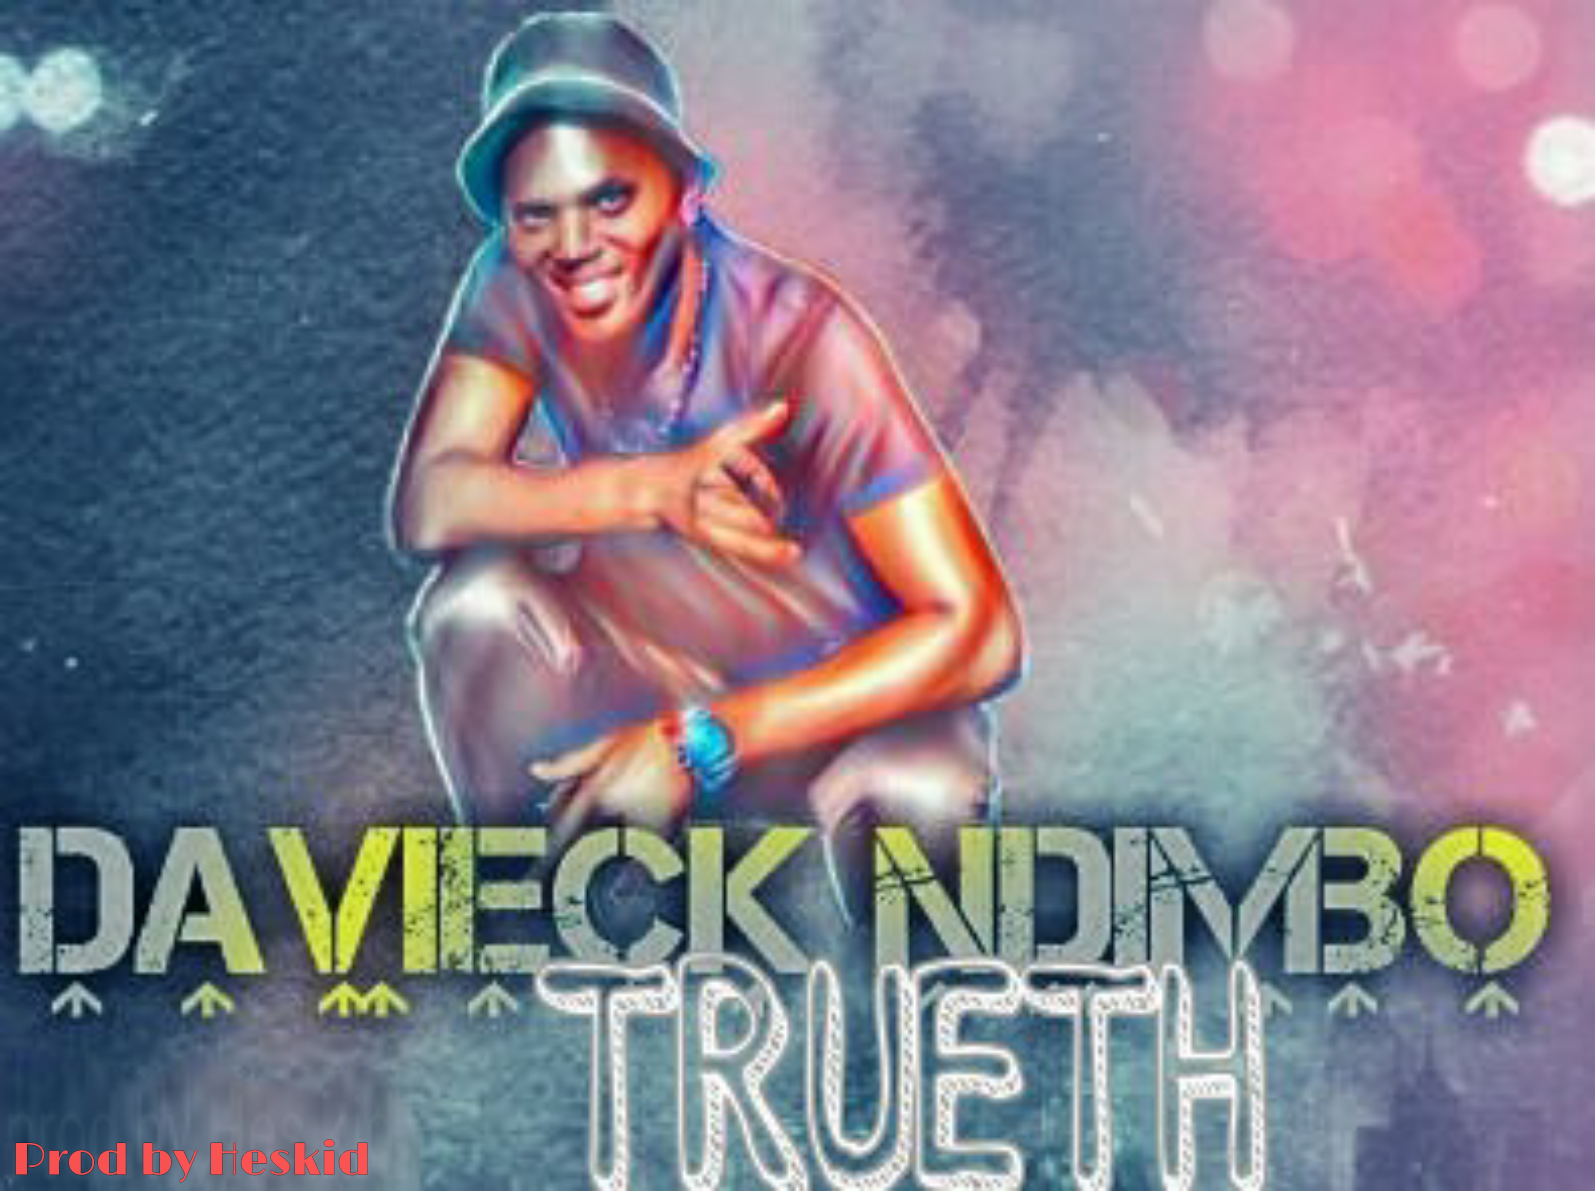 Davieck – Trueth